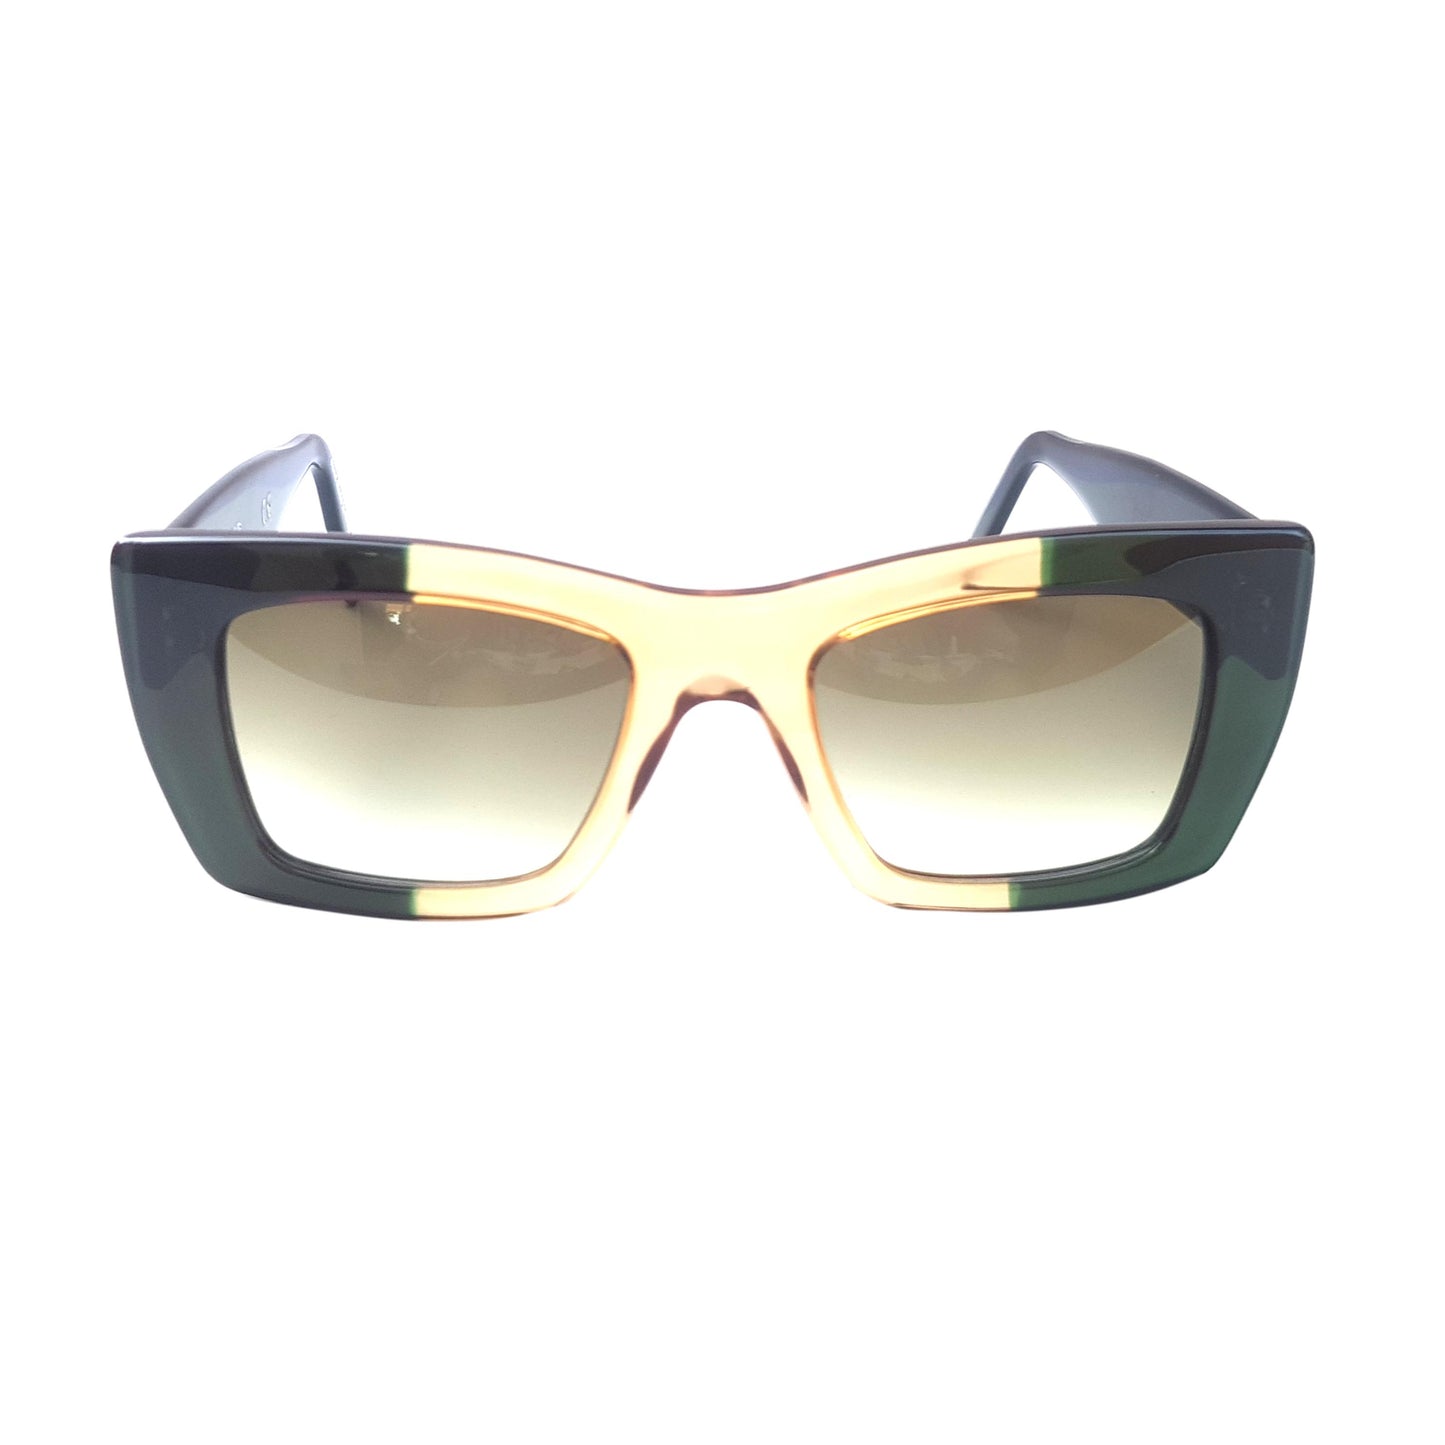 Rectangular Sunglasses - G79 - Dark Green - Translucent